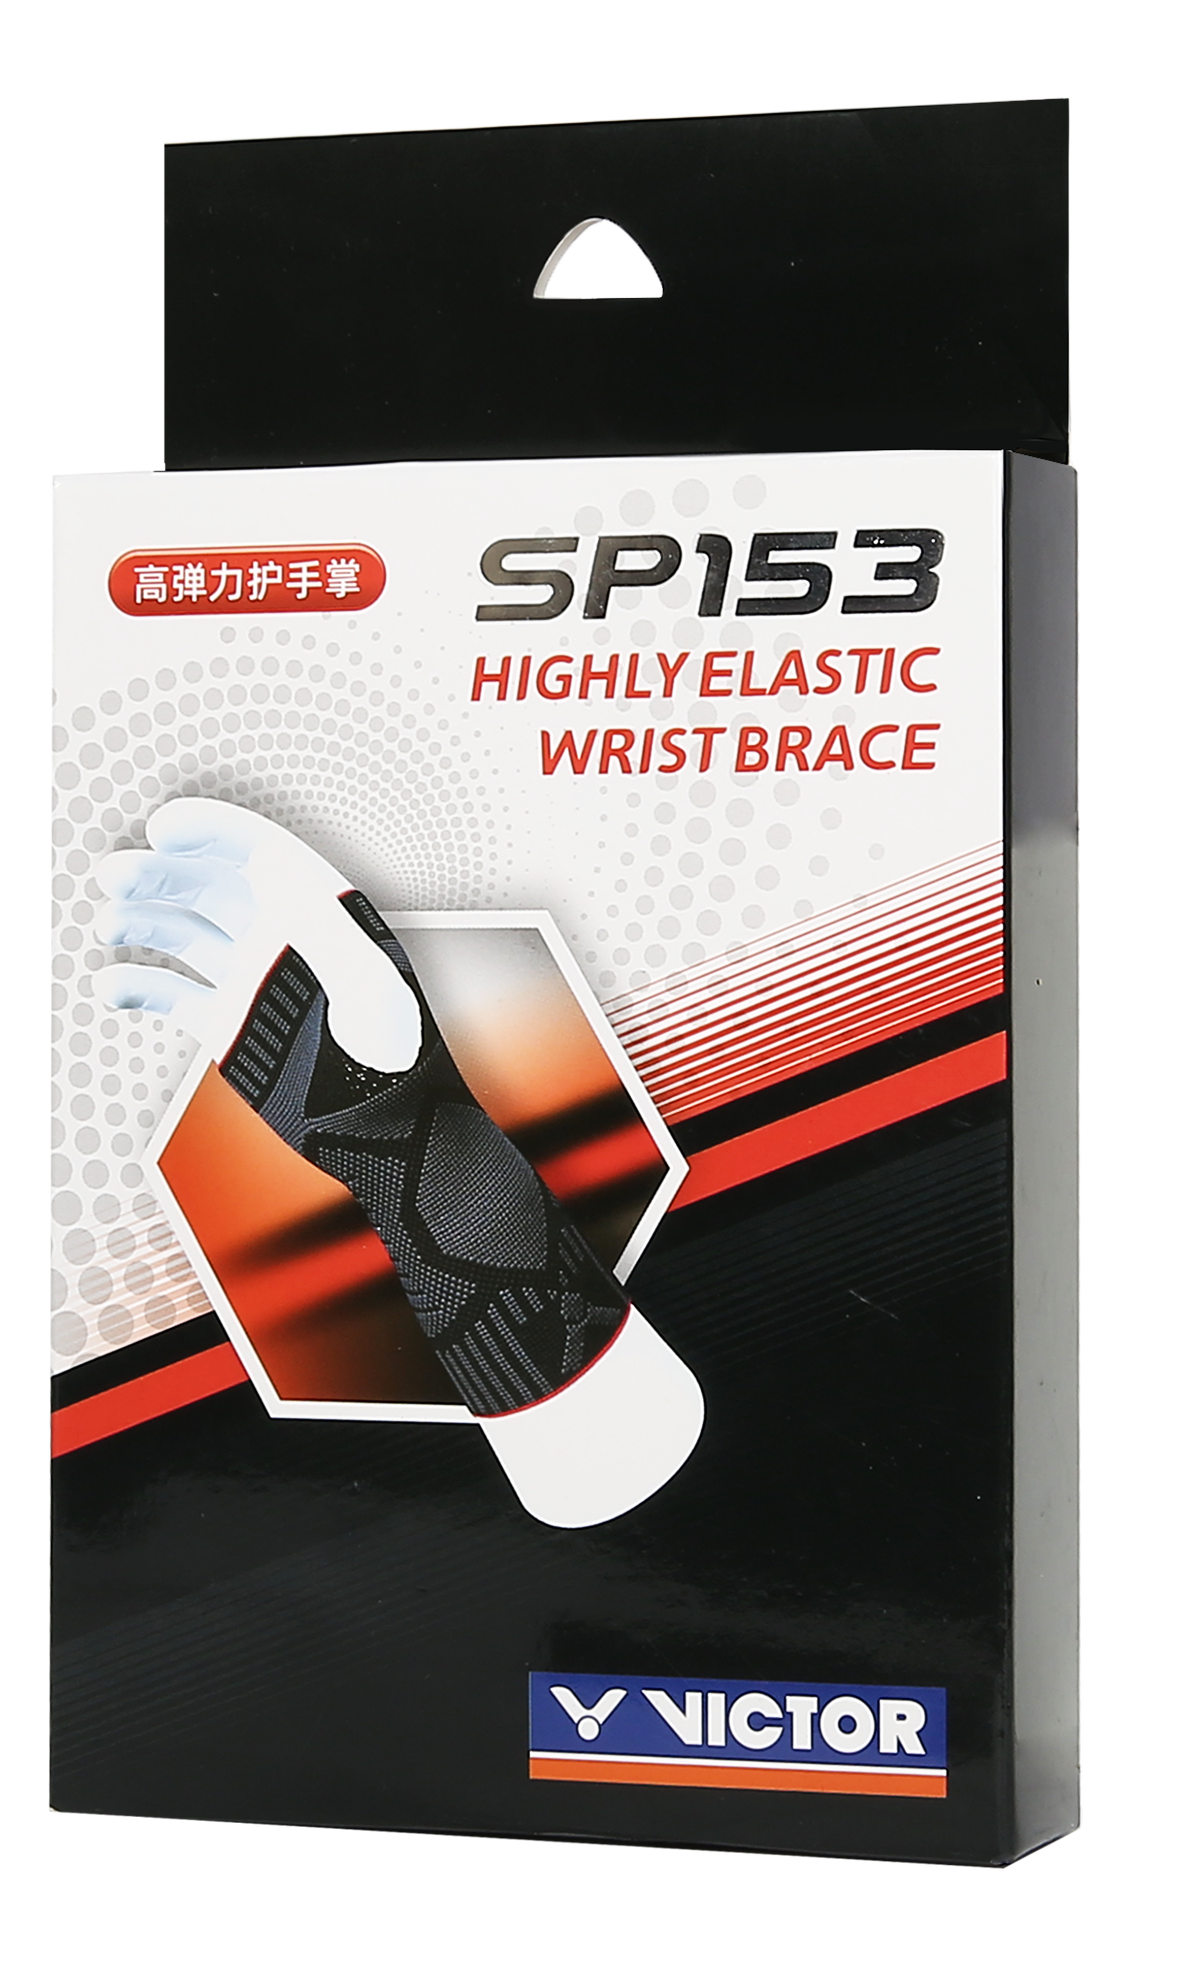 SP153 ELASTIC WRIST BRACE